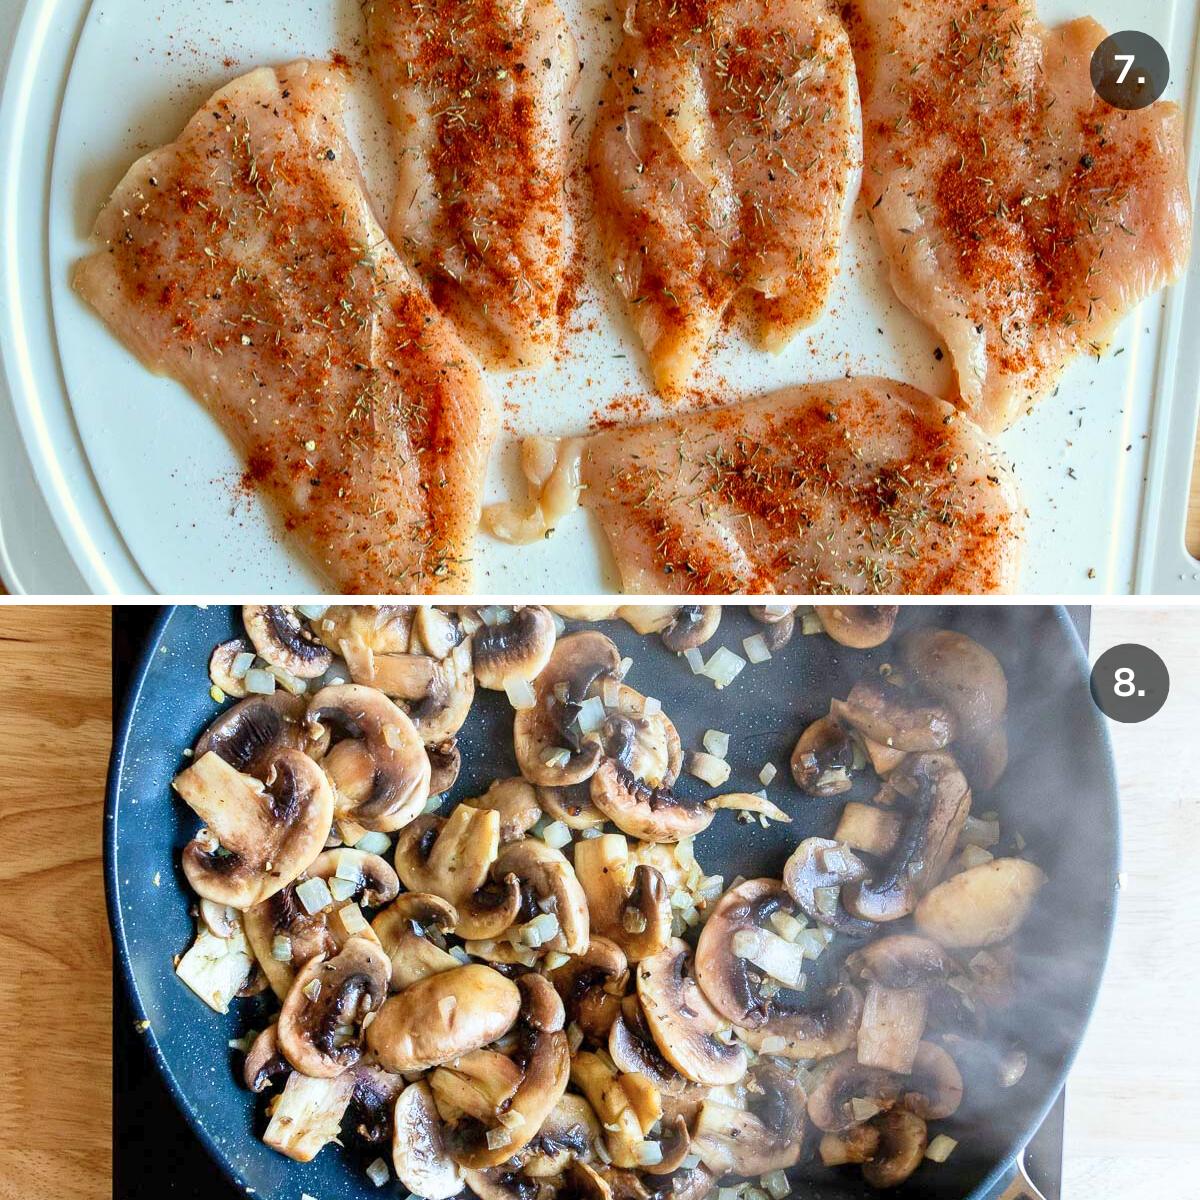 Seasoning chicken cutlets and pan frying mushrooms.